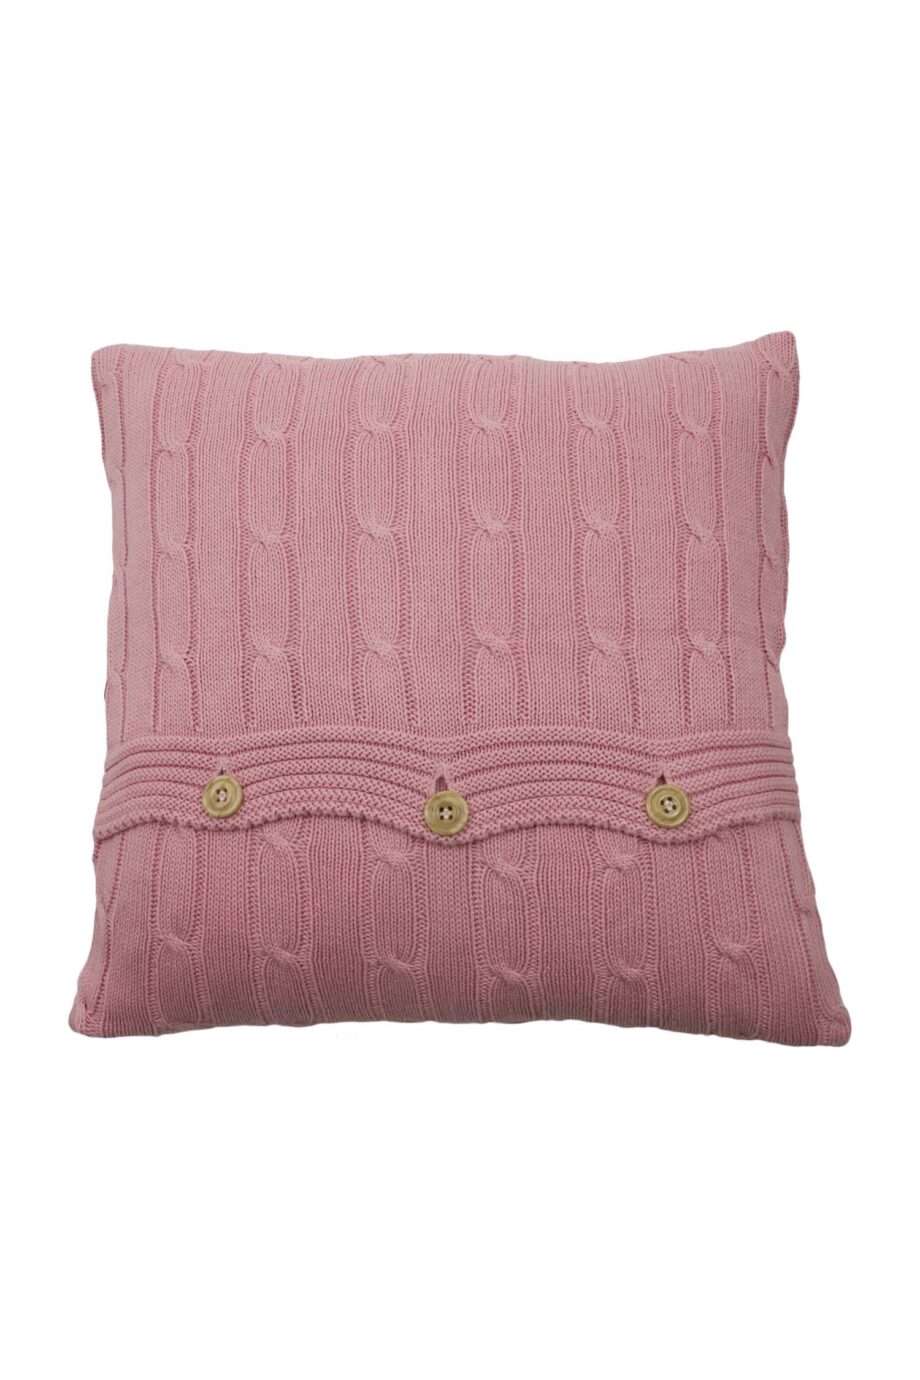 twist old rose knitted cotton pillowcase medium